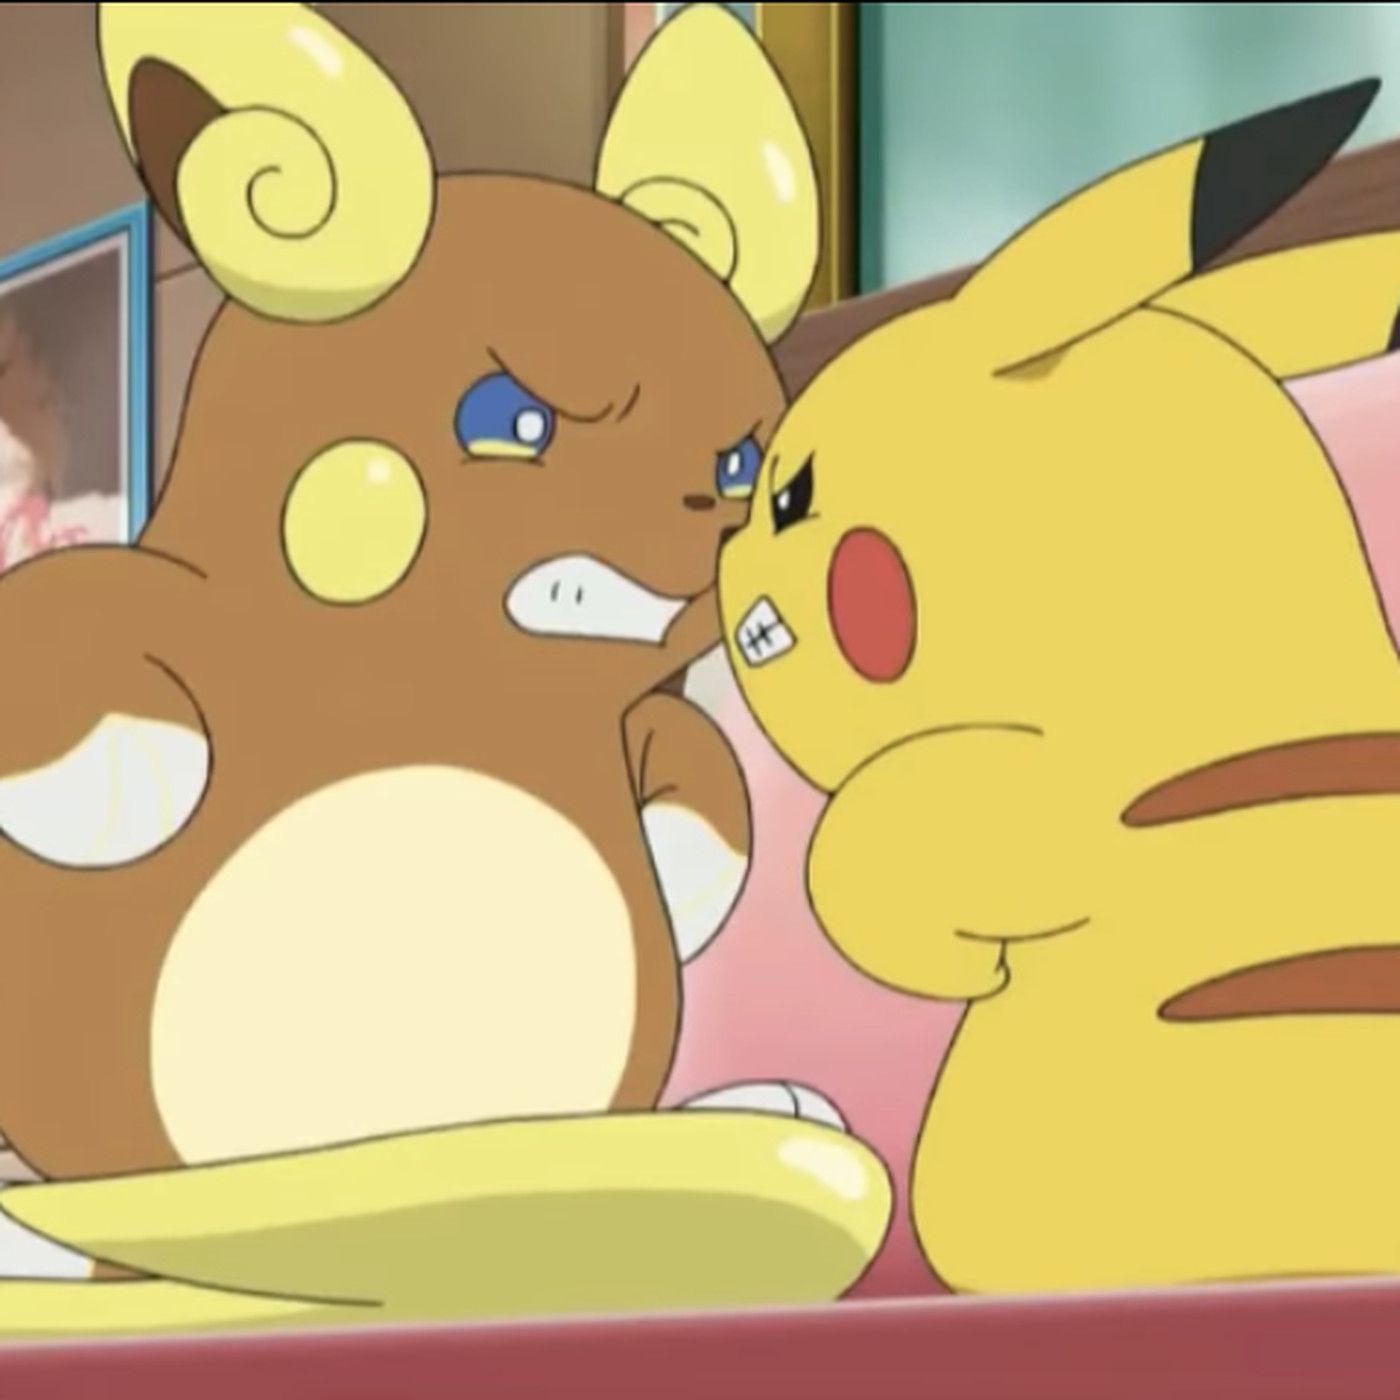 Pokémon anime rekindles Pikachu and Raichu's rivalry